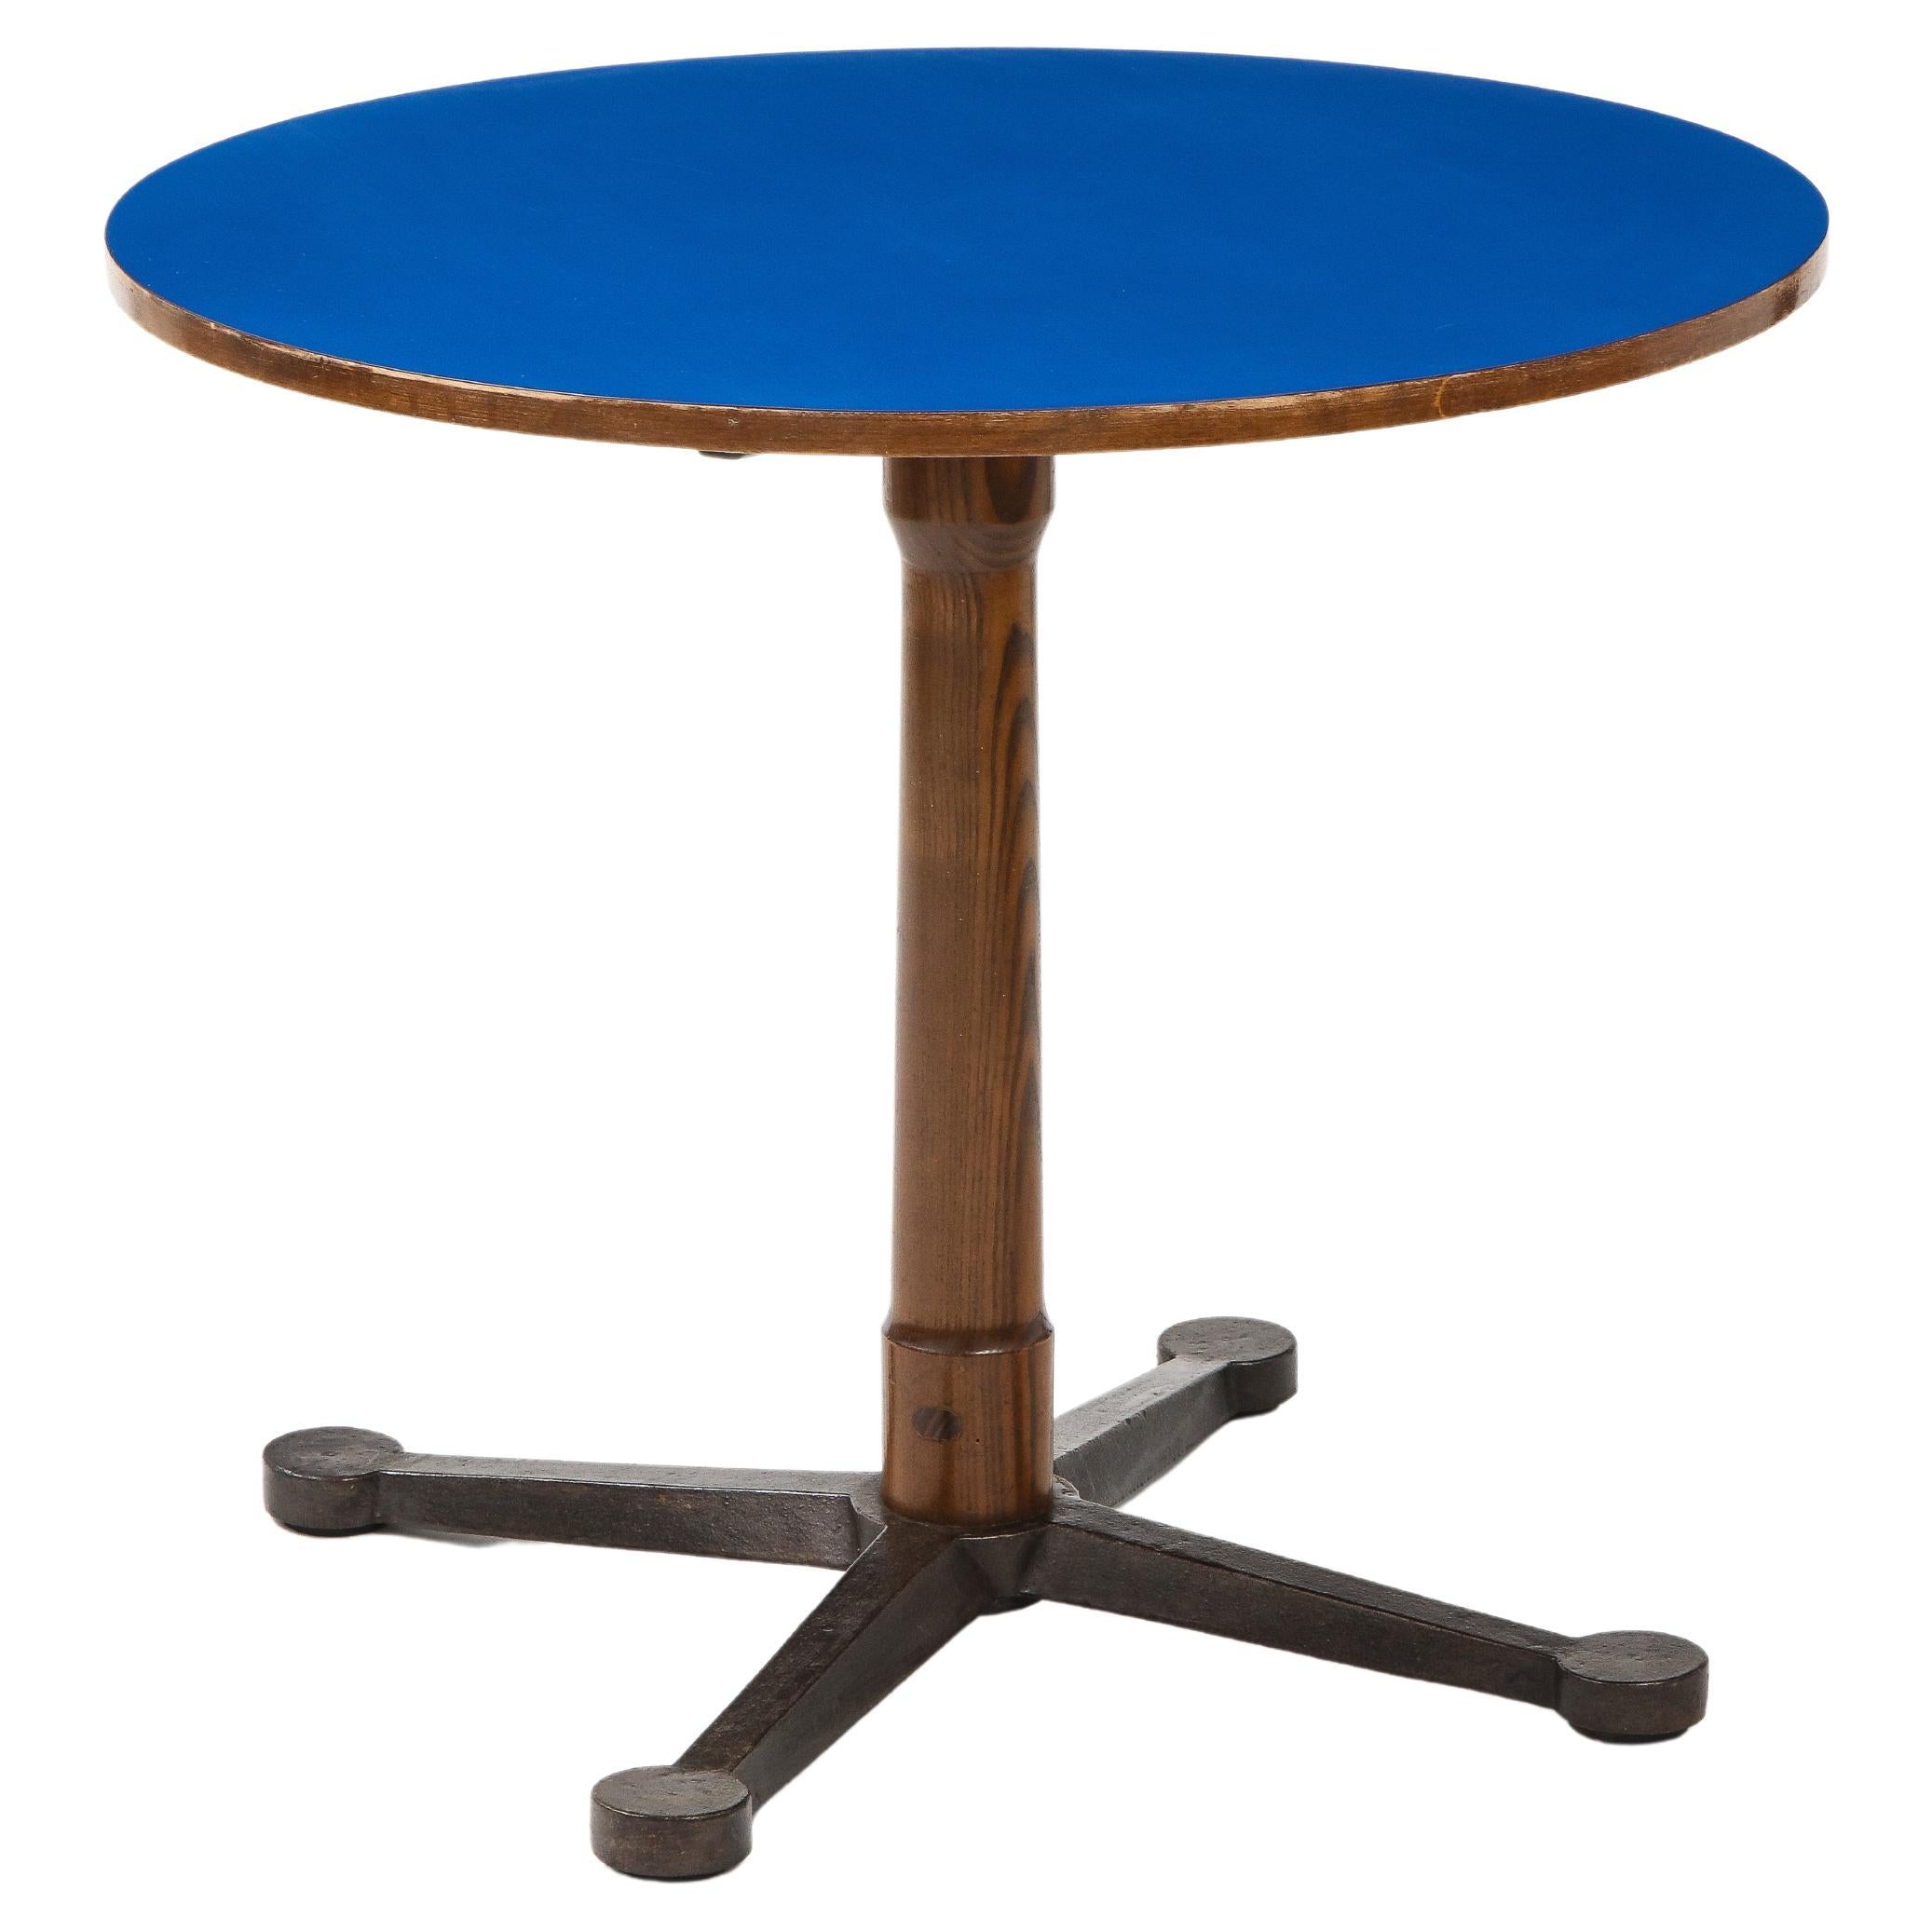 Original Cassina Table, Blue Laminate, Cast Metal & Wood, Italian 1960’s